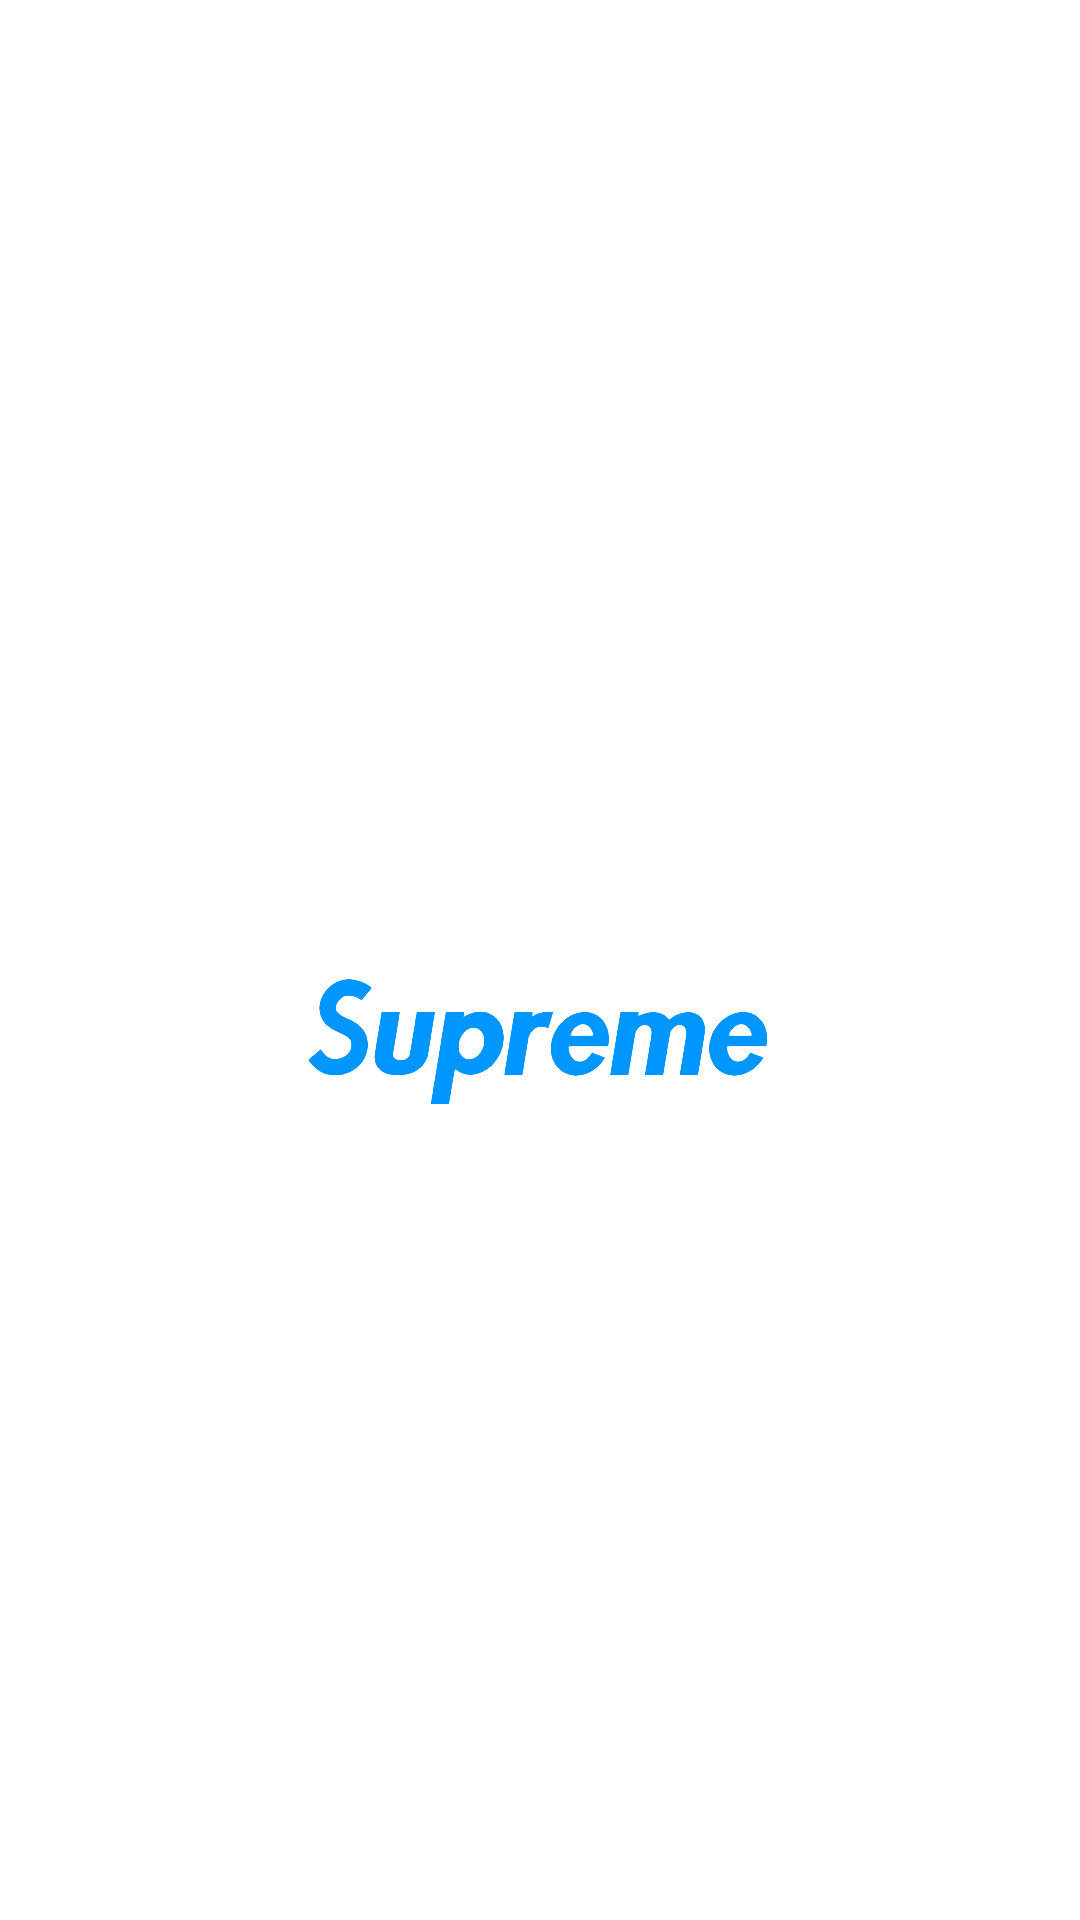 supreme11 - Supreme[シュプリーム]の高画質スマホ壁紙23枚 [iPhone＆Androidに対応]